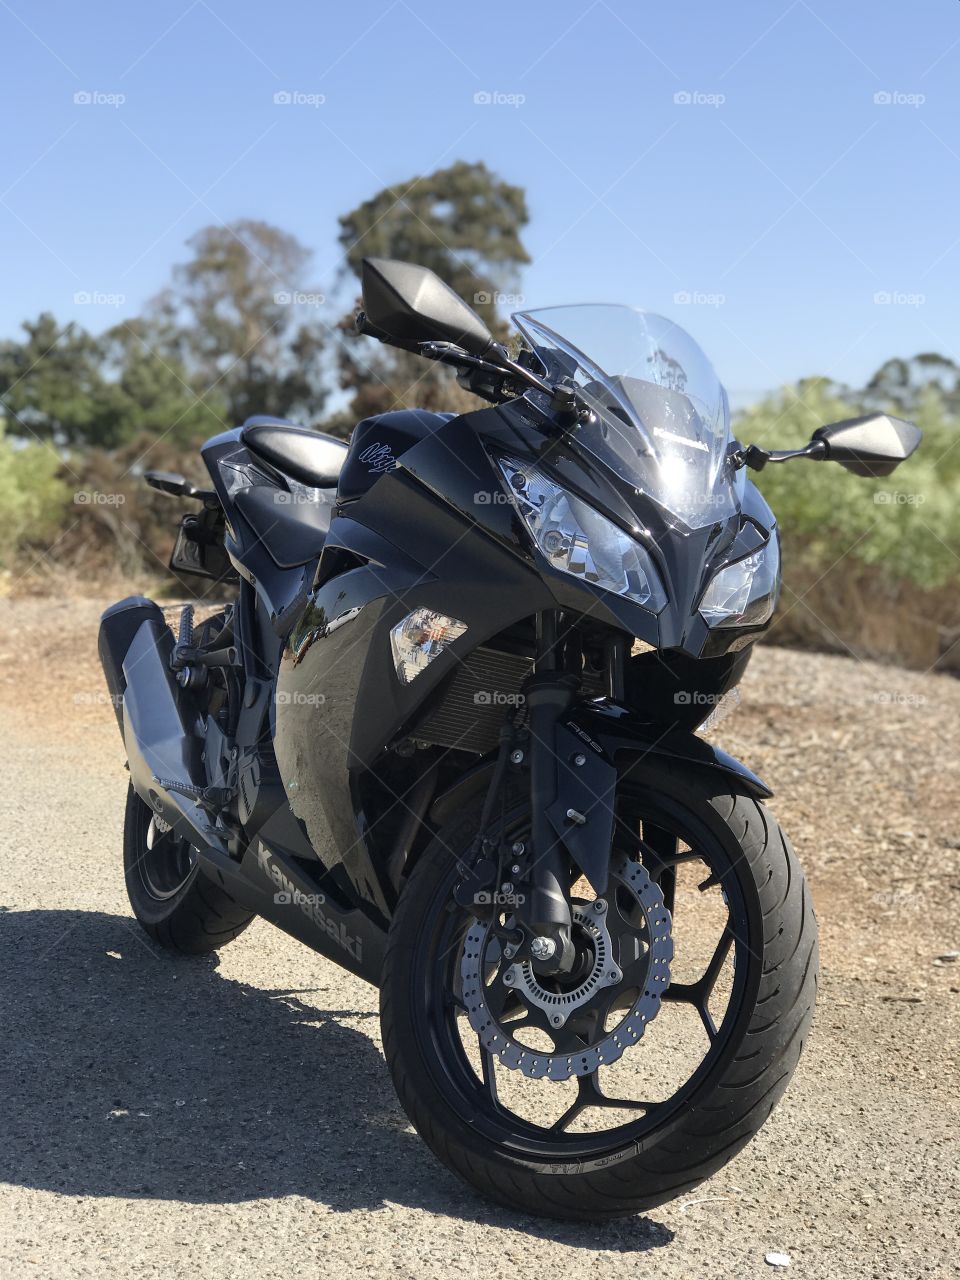 Kawasaki Ninja 300 motorcycle 